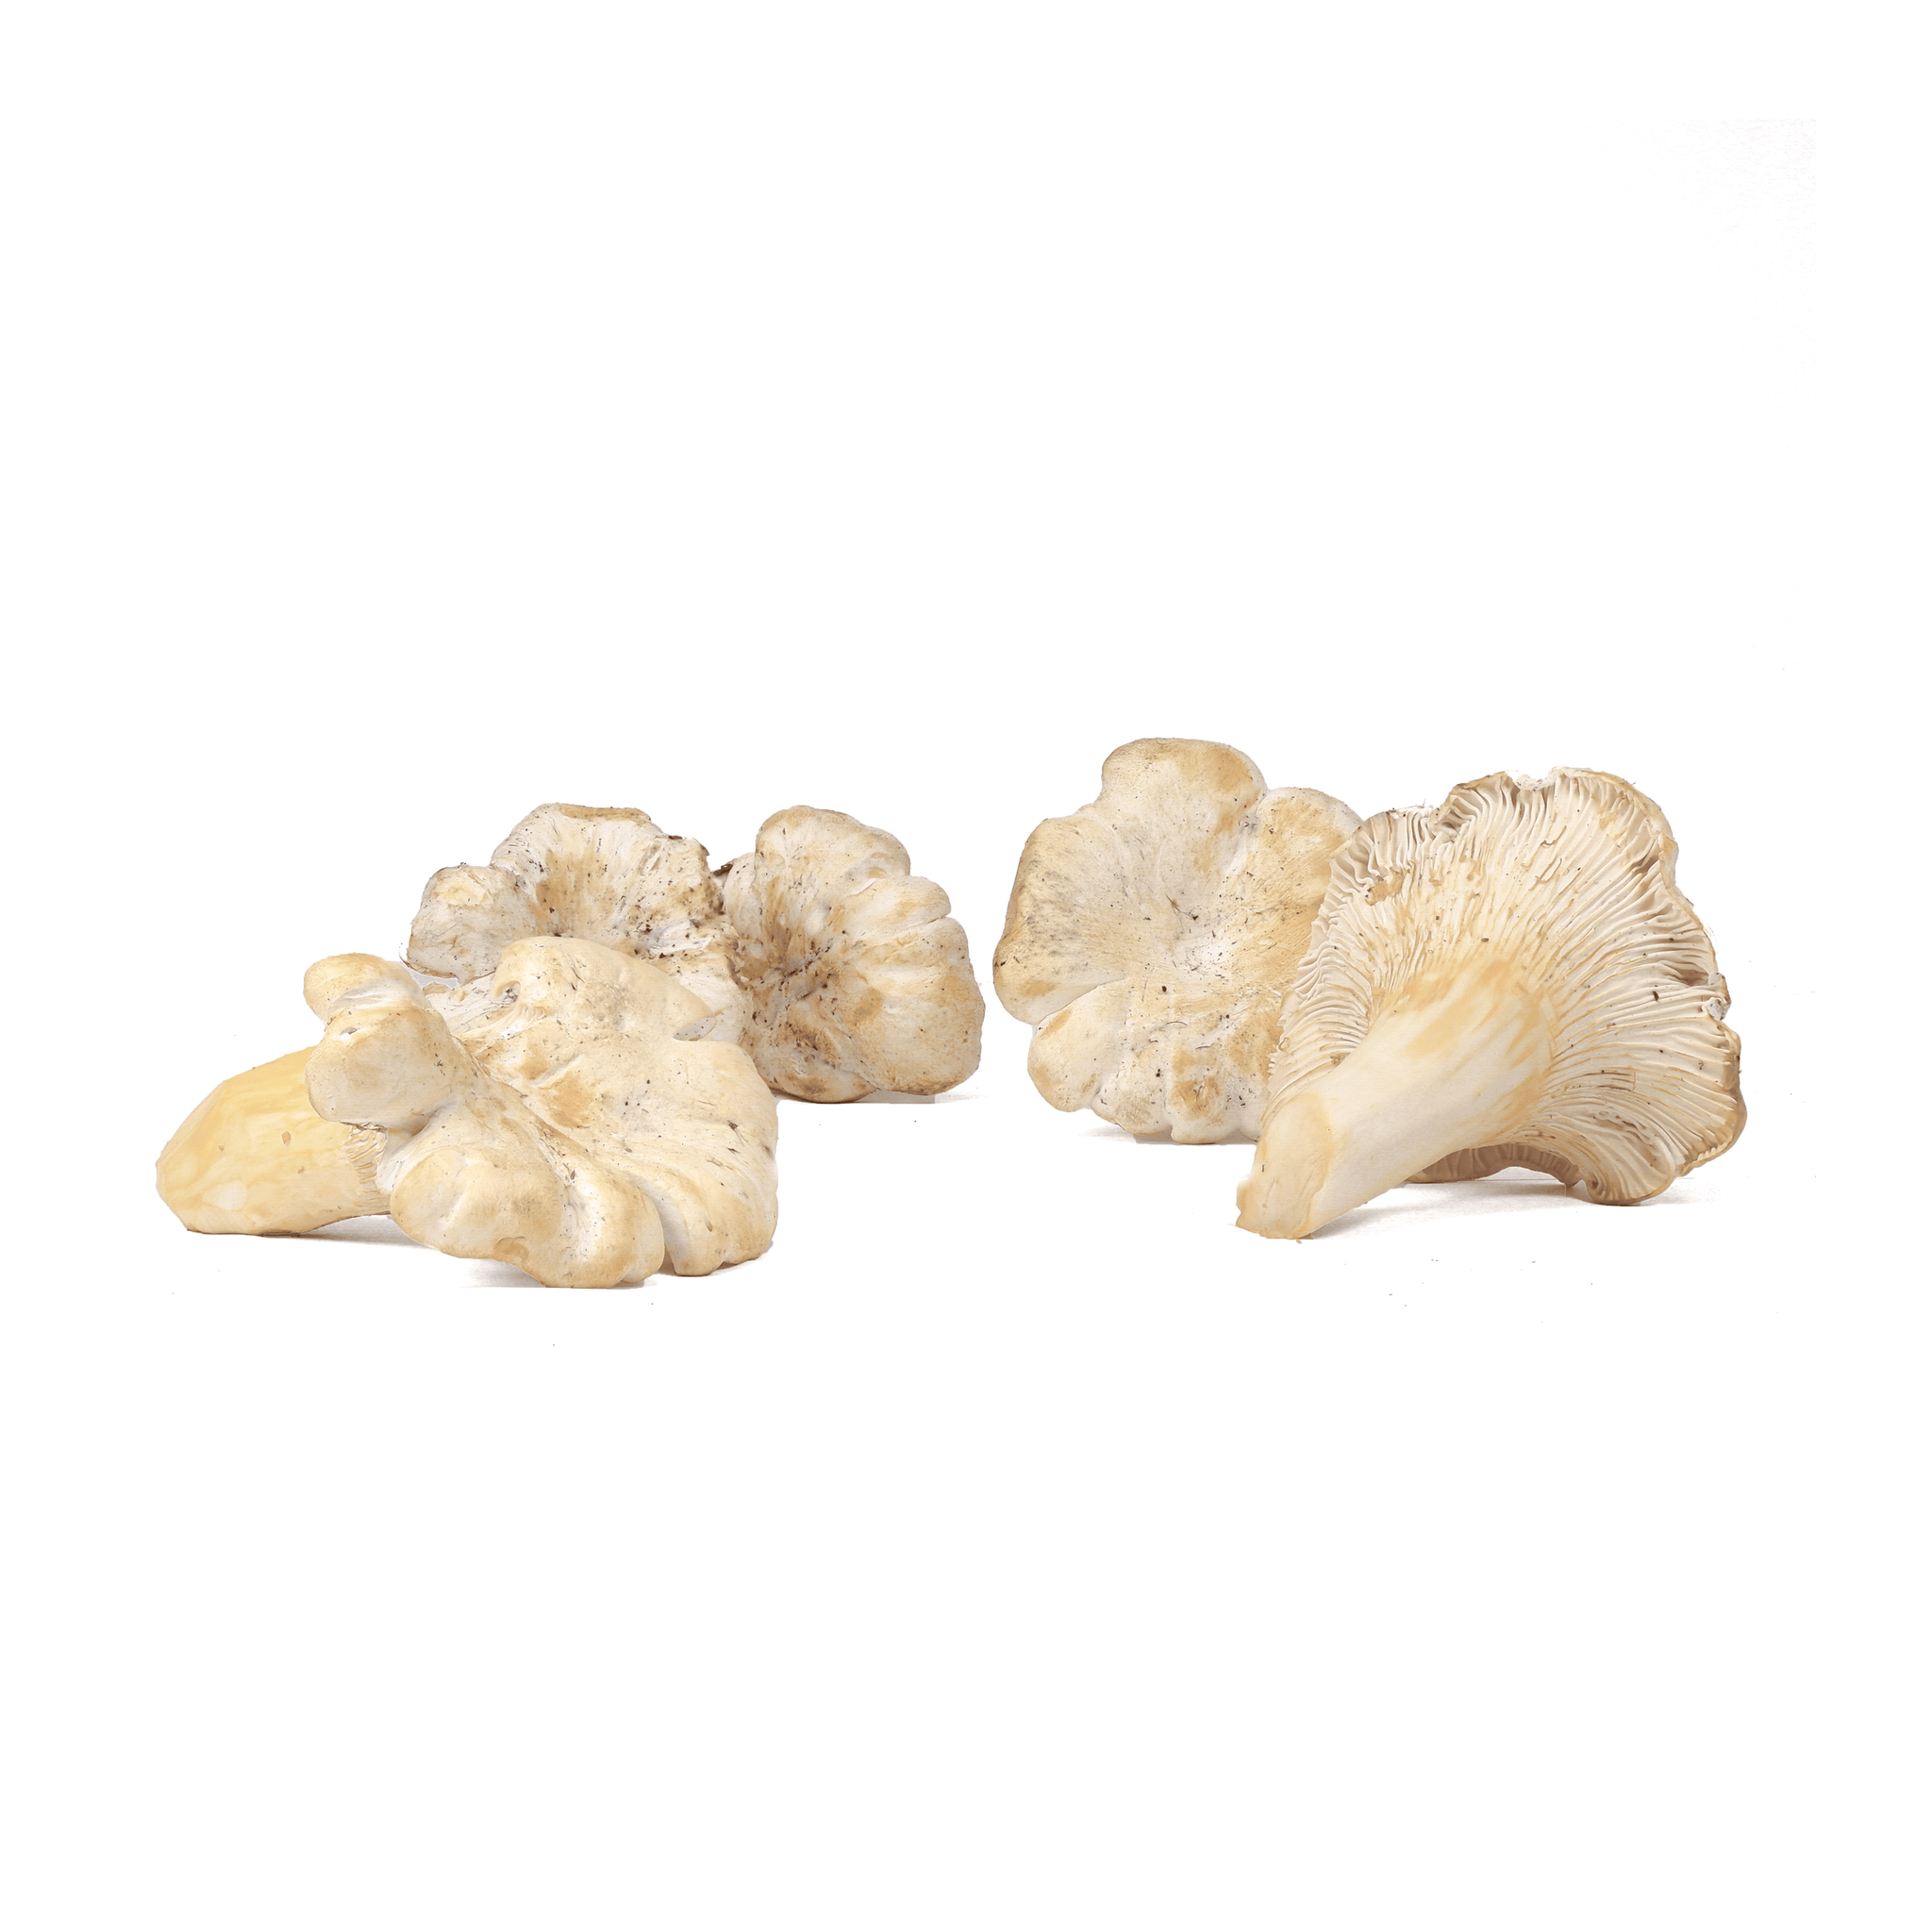 Fresh White Chanterelle Mushrooms